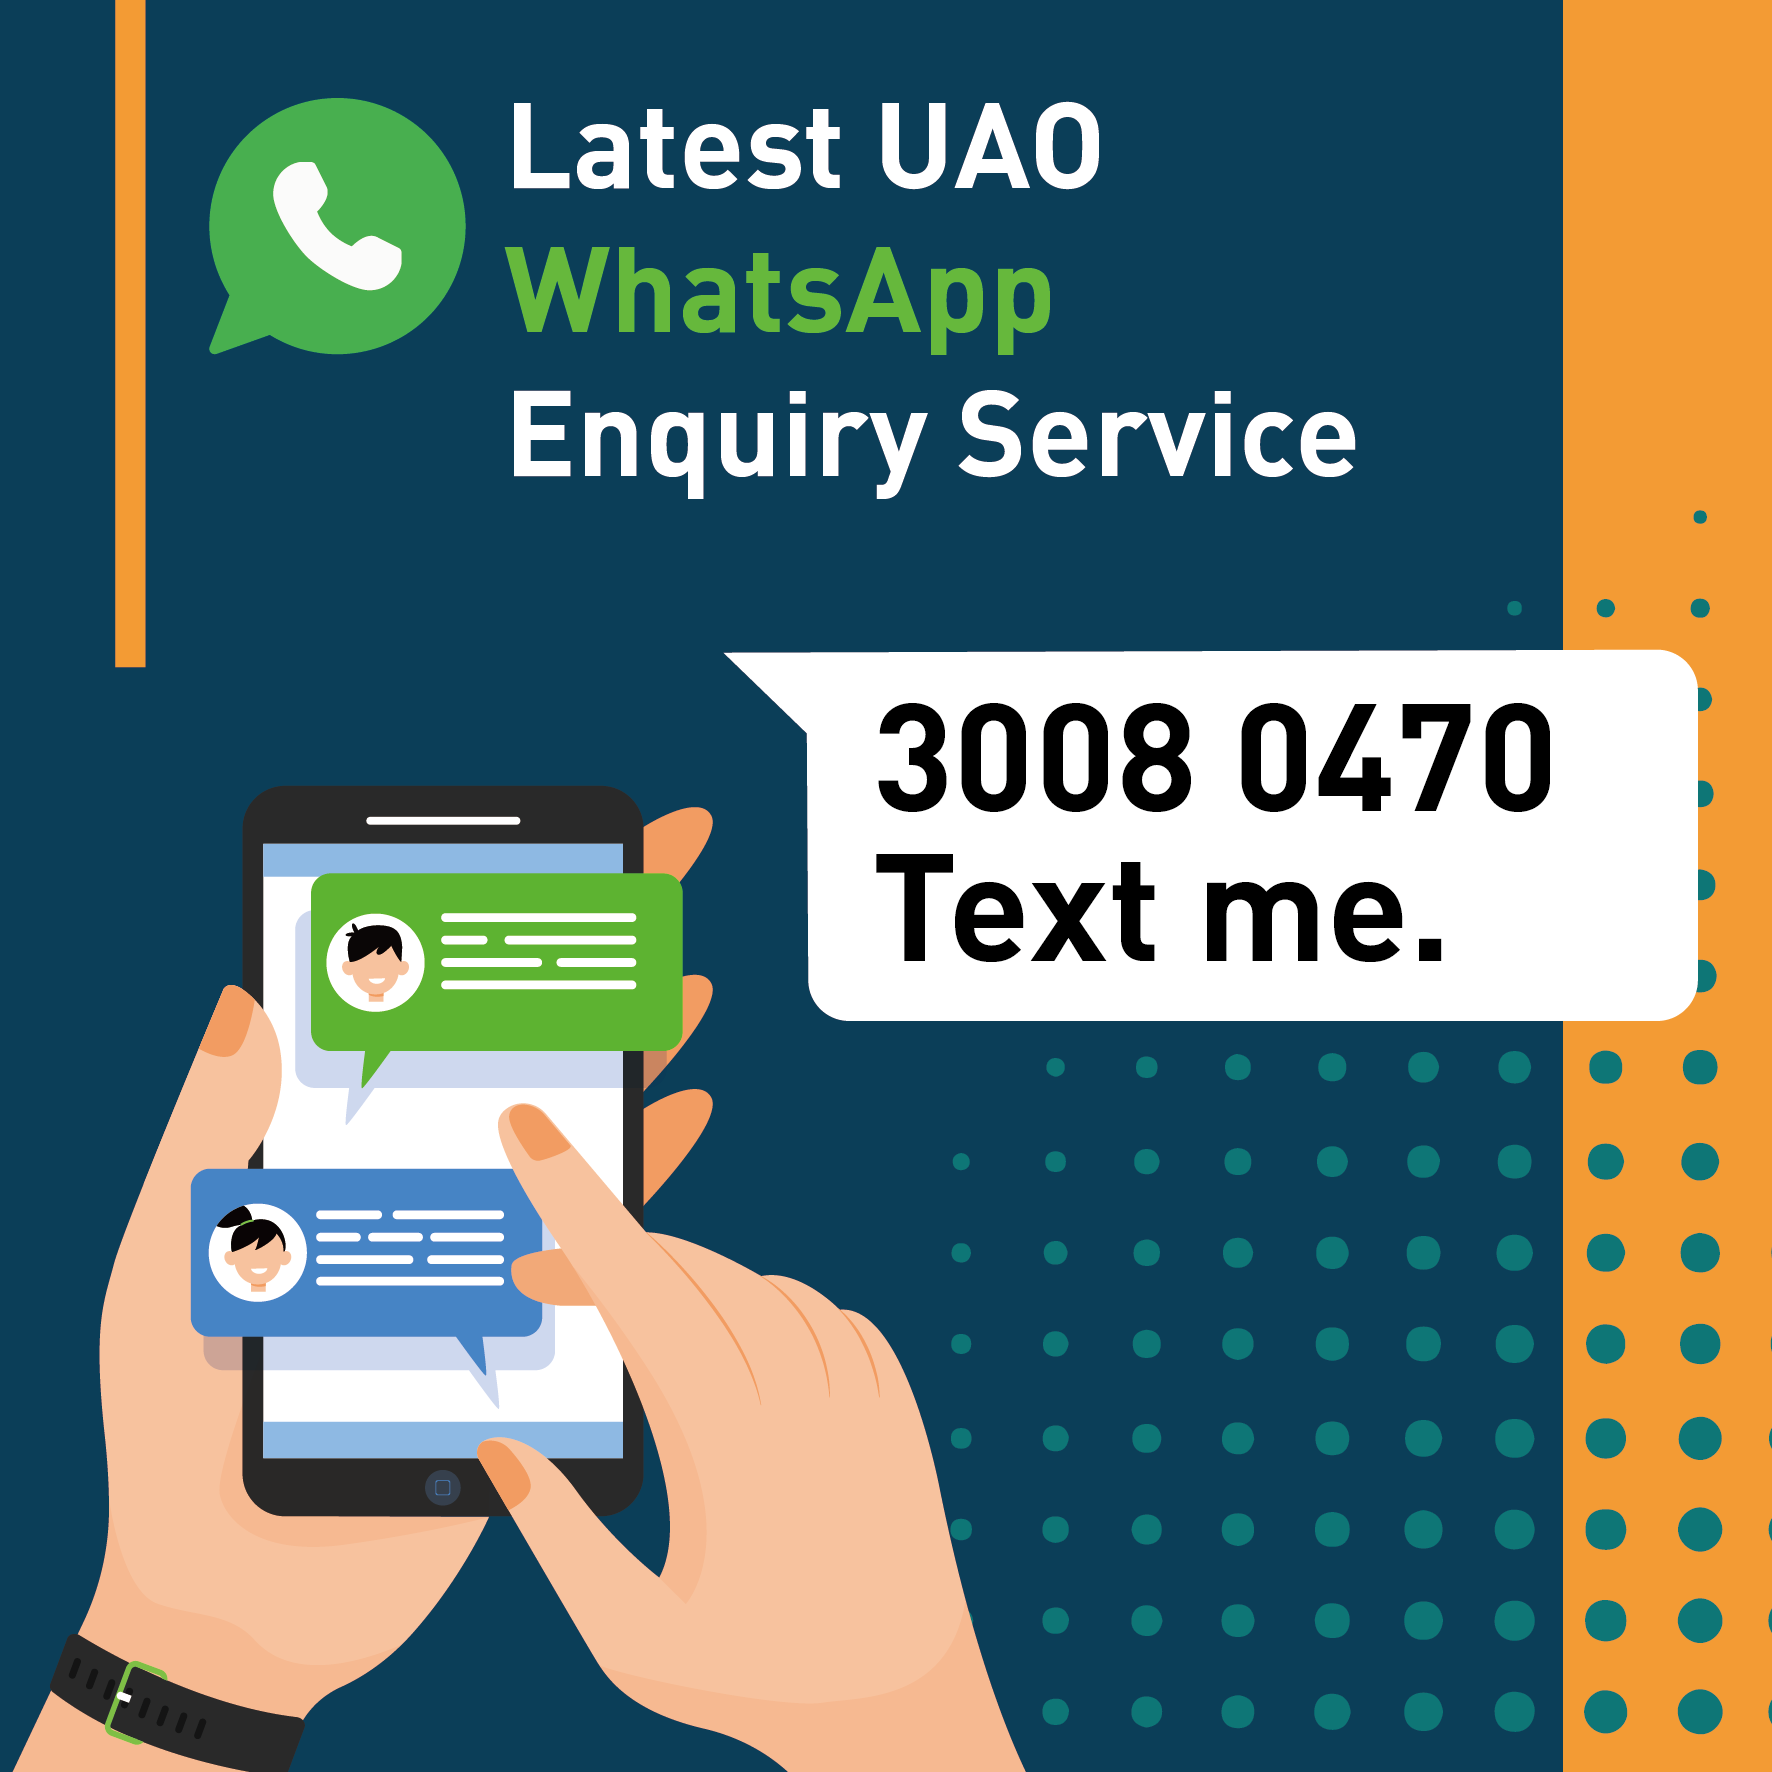 WhatsApp Enquiry Service